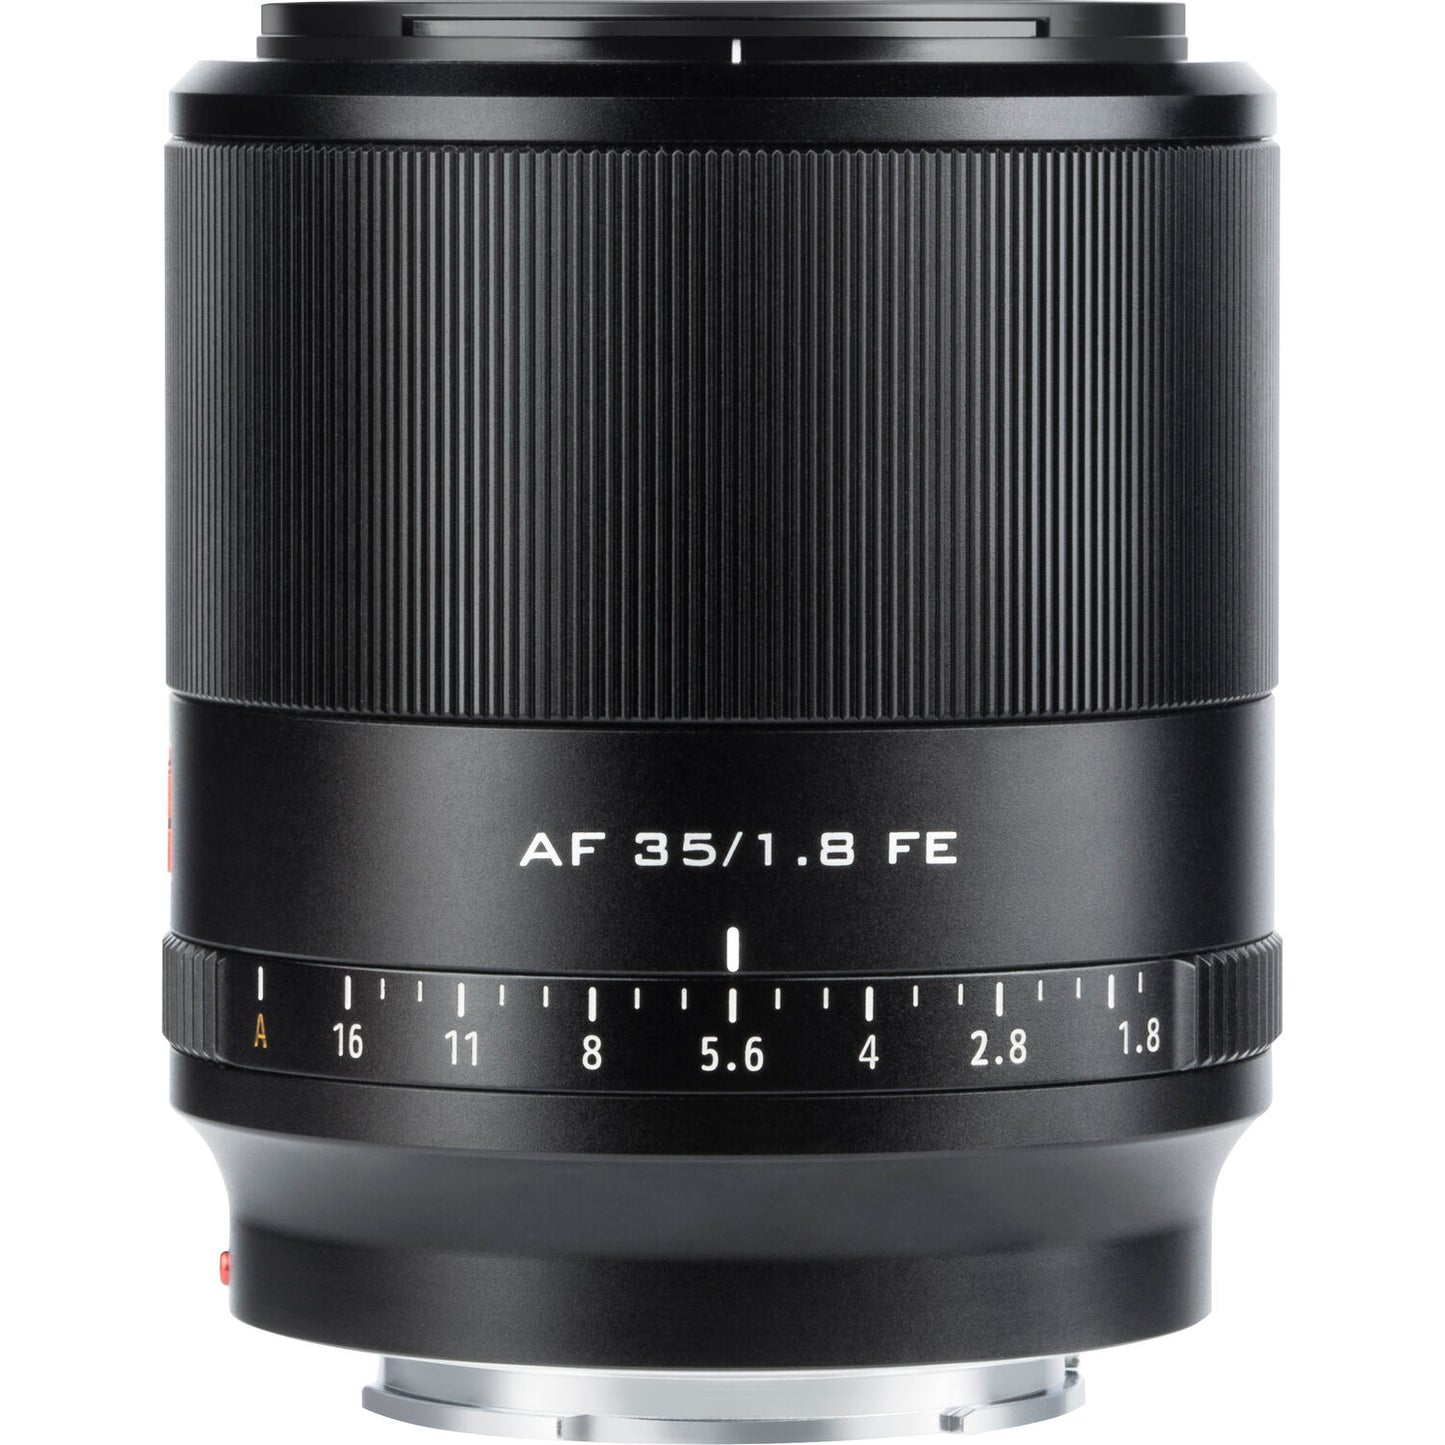 Viltrox 35mm f/1.8 FE Autofocus AF Prime Lens Full Frame for Sony E-Mount Mirrorless Cameras